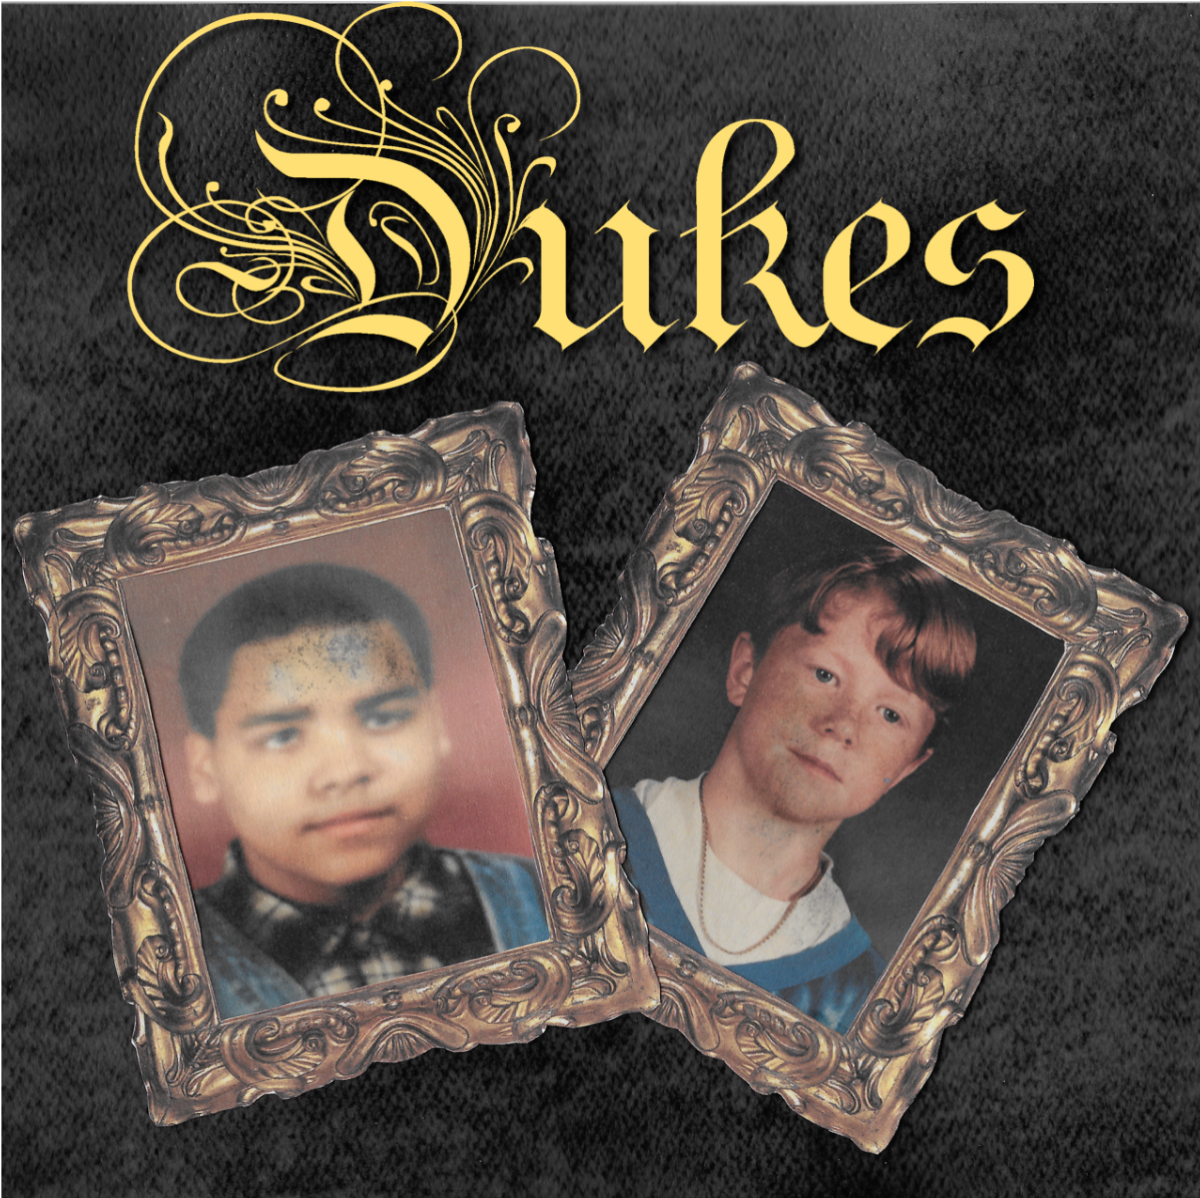 KING 810 Share Video For New Song "Dukes"